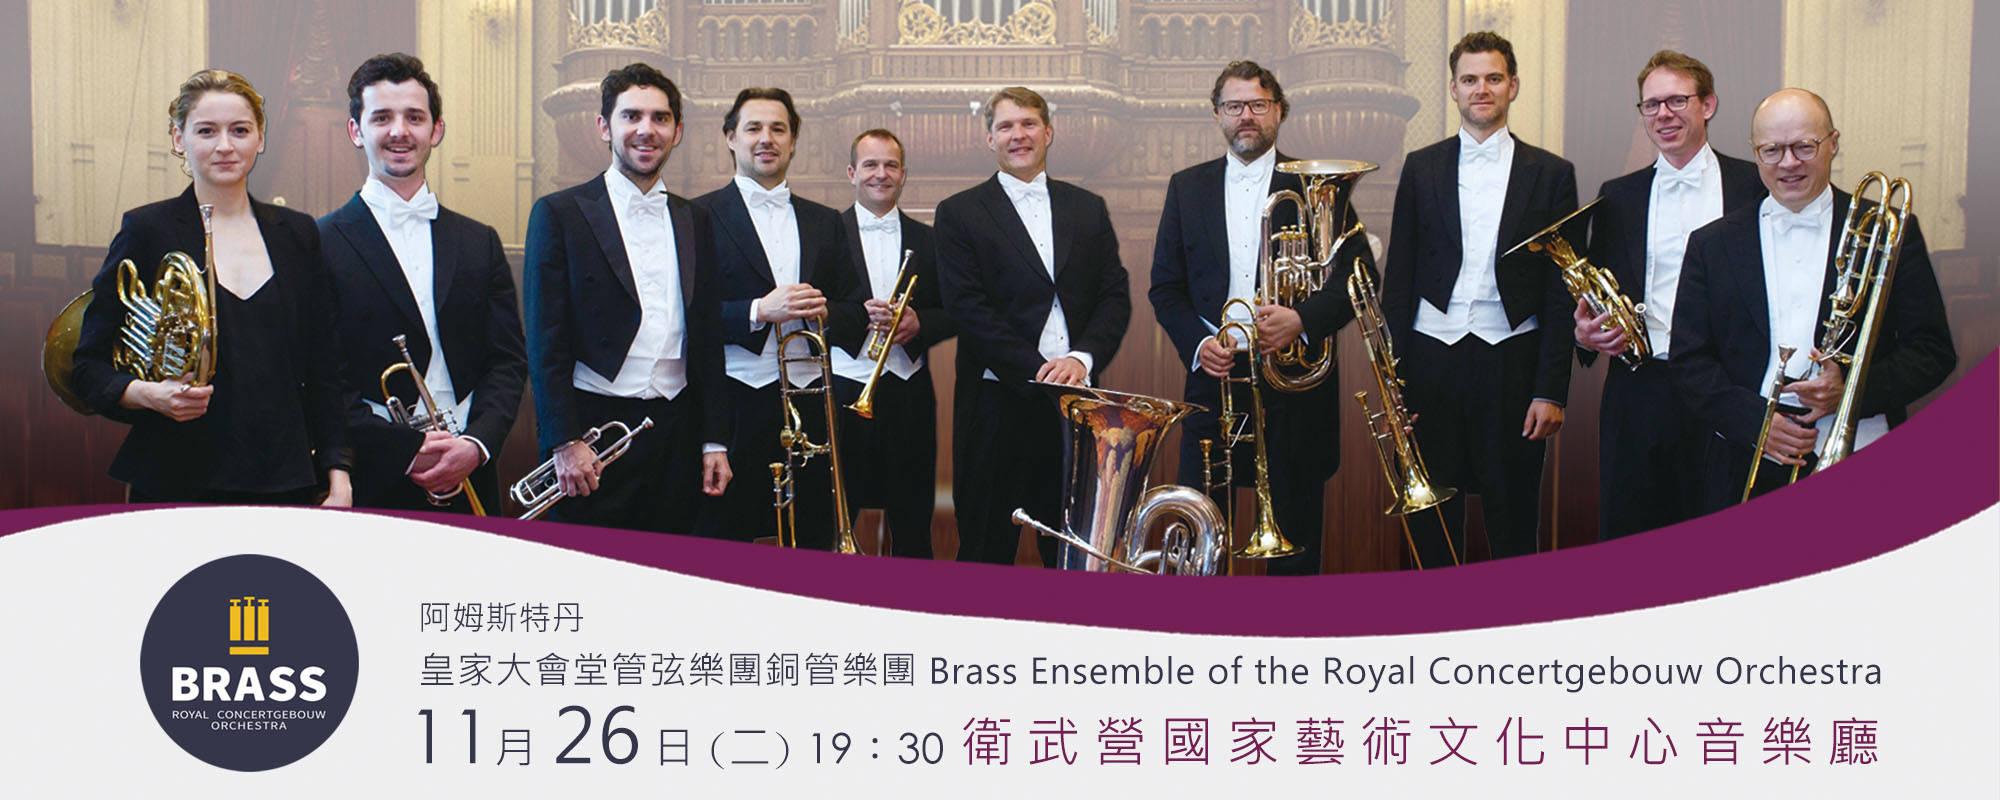 Brass Ensemble of RCO 2019 Concert